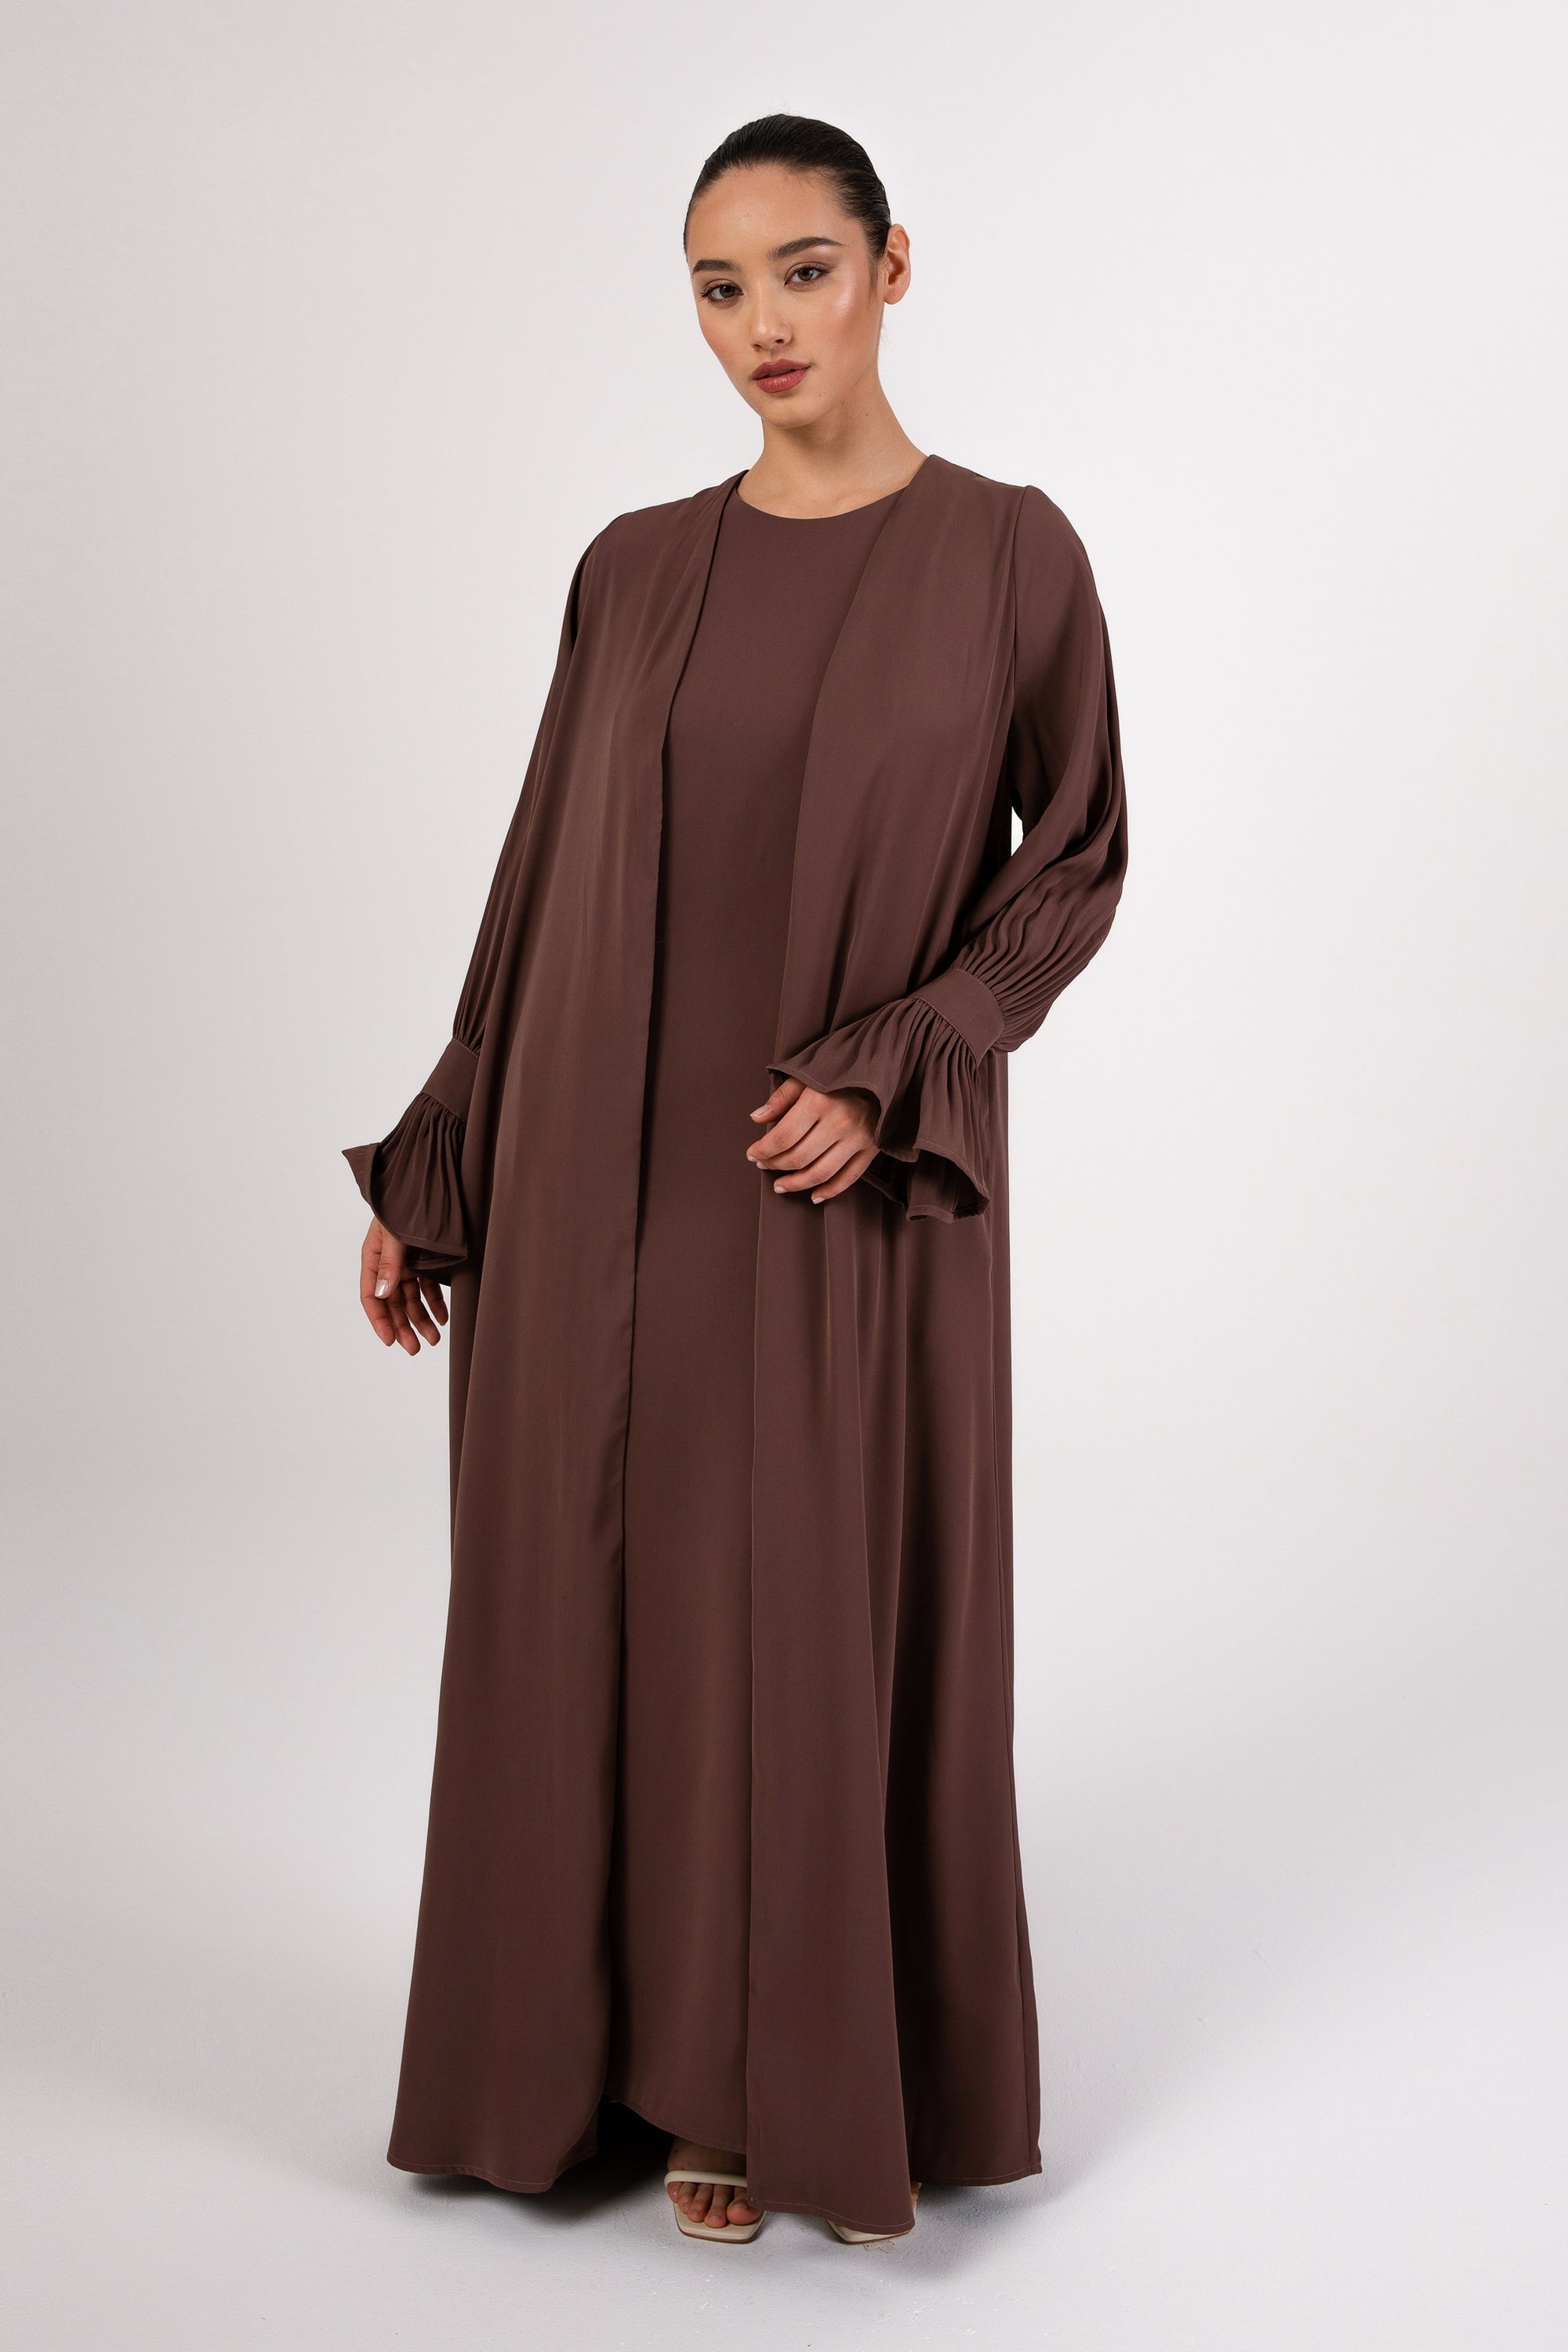 Jamila Cinched Sleeve Open Abaya - Cocoa Brown Veiled 